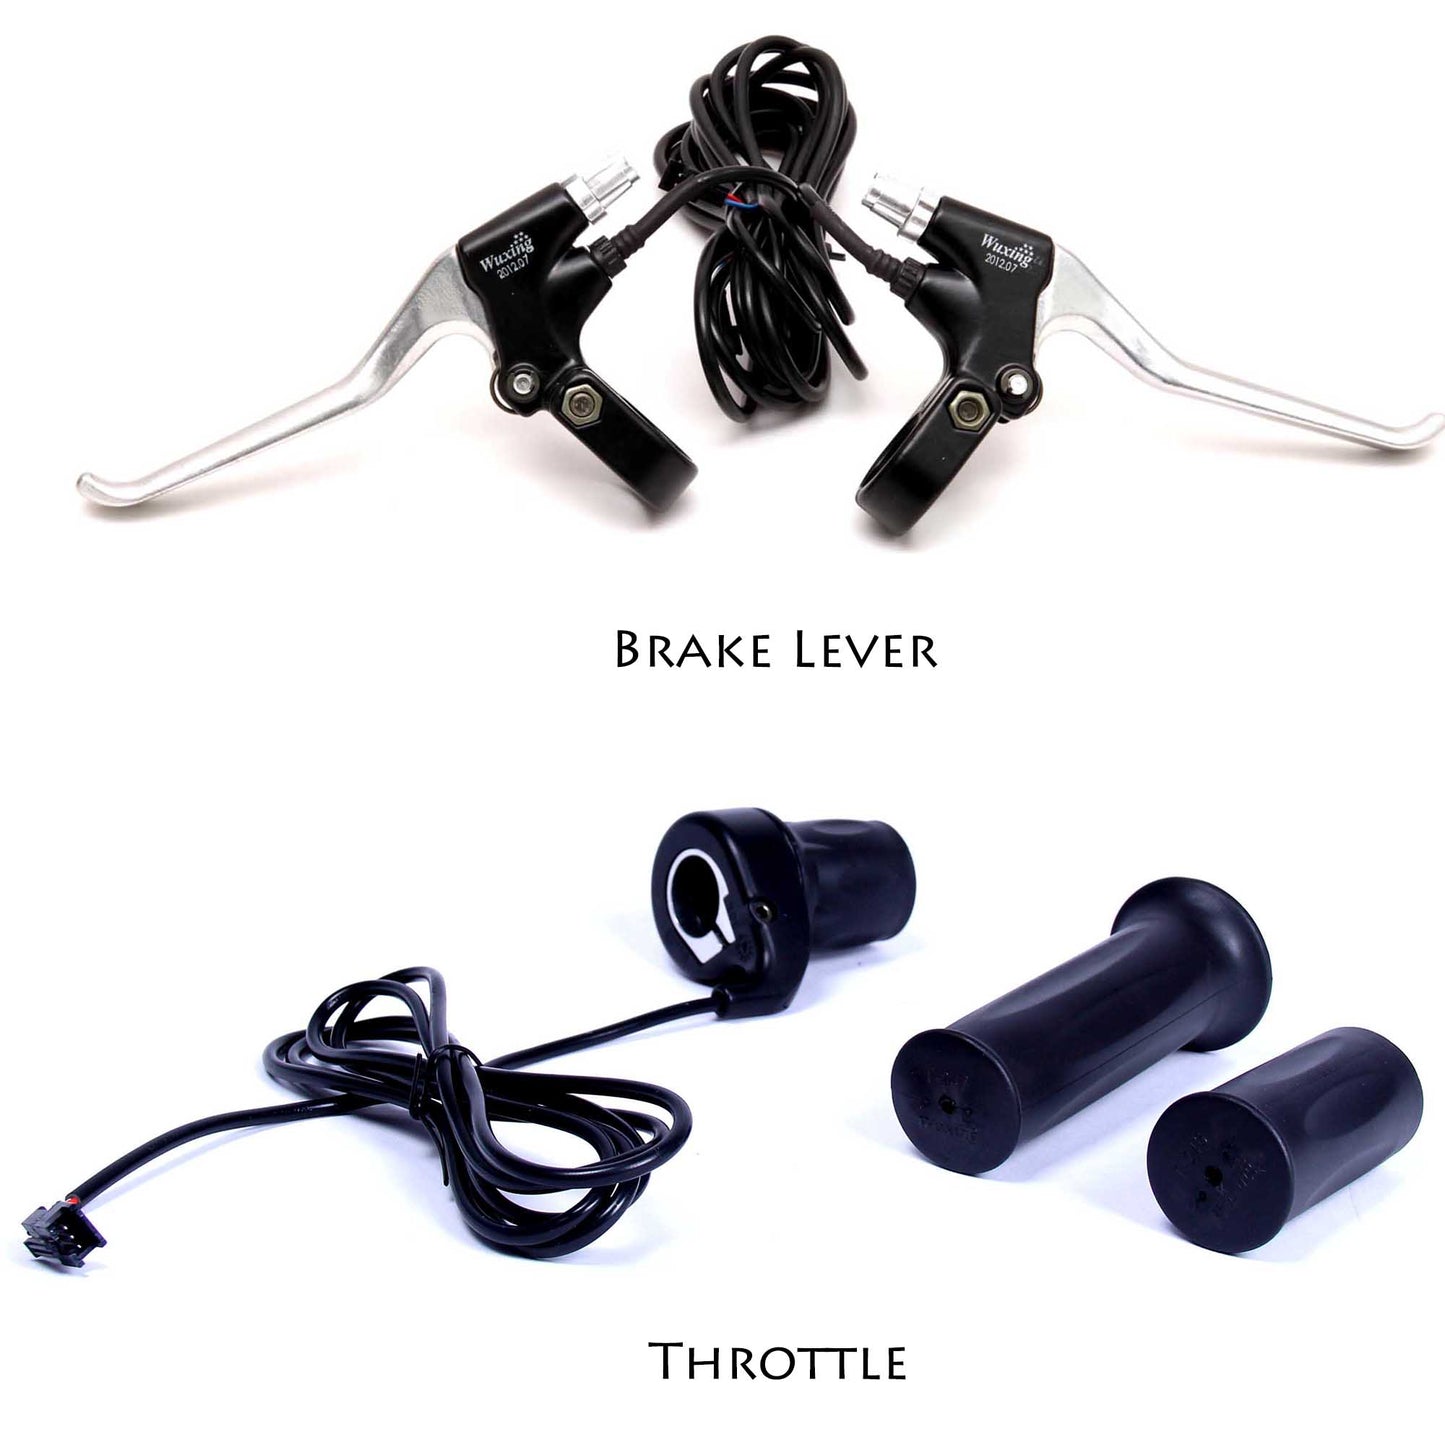 Brake lever and twist throttle